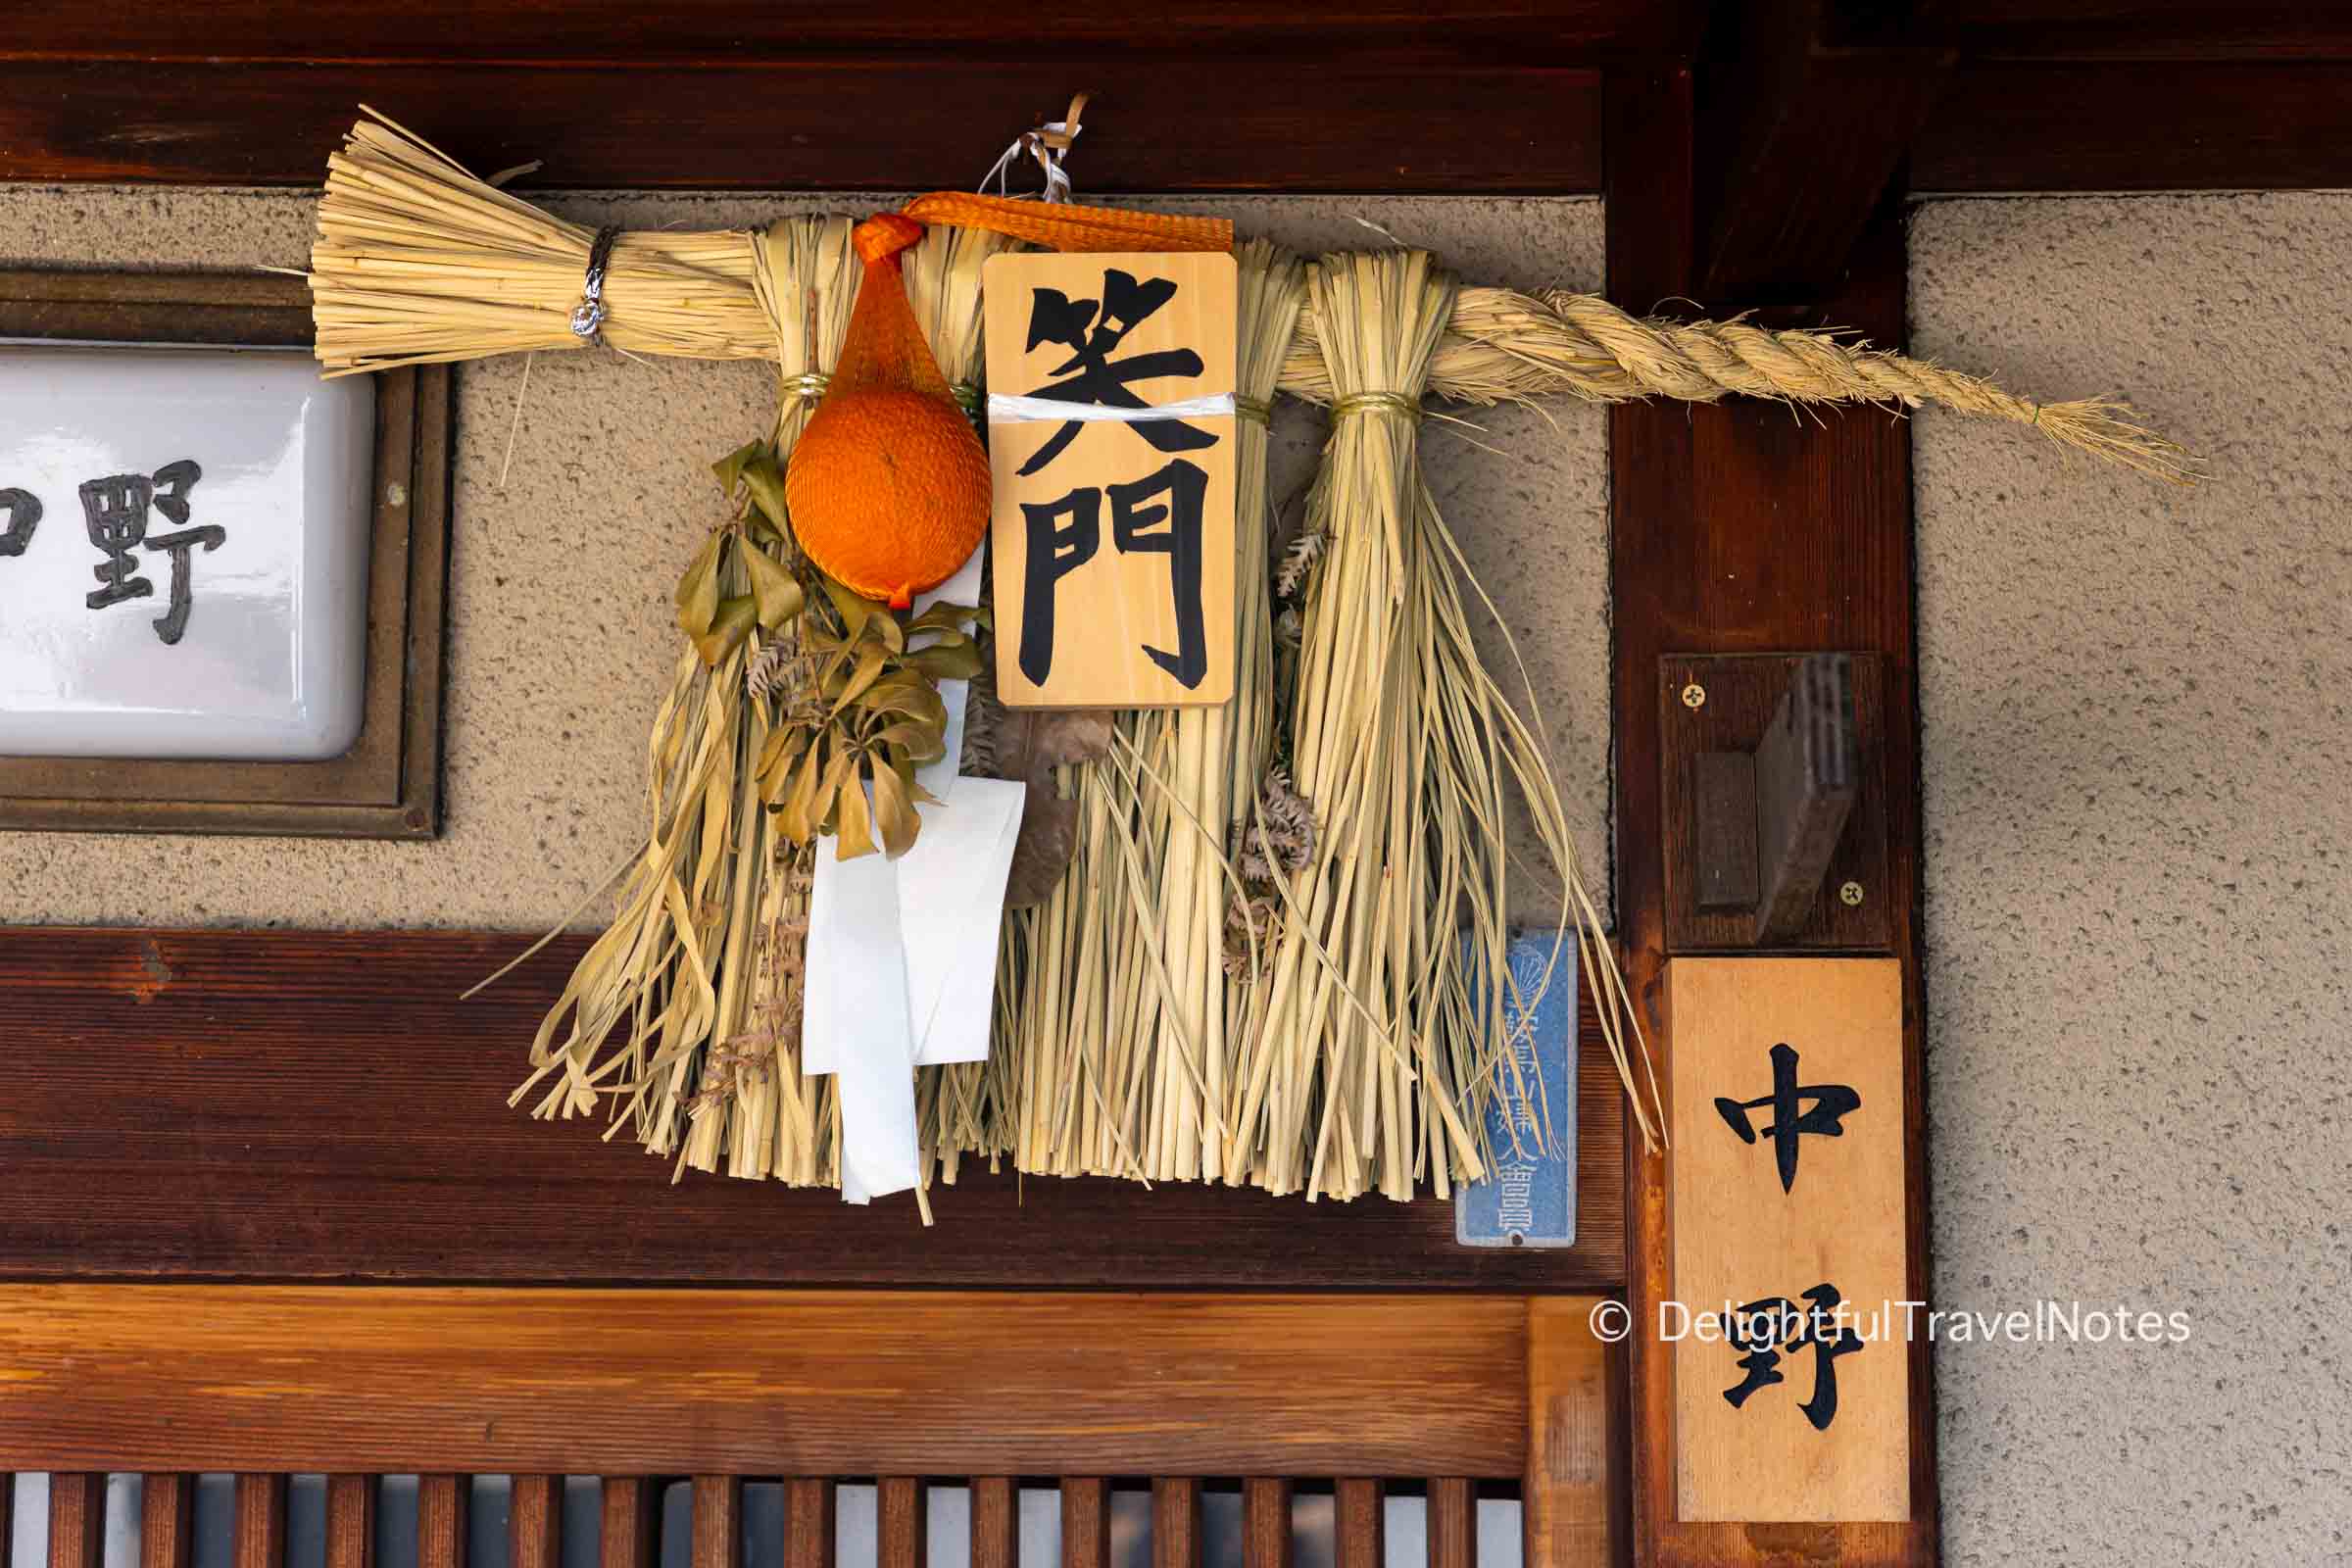 Shimenawa rice straw decoration with daidai (orange) hung over a door in Gion, Kyoto.